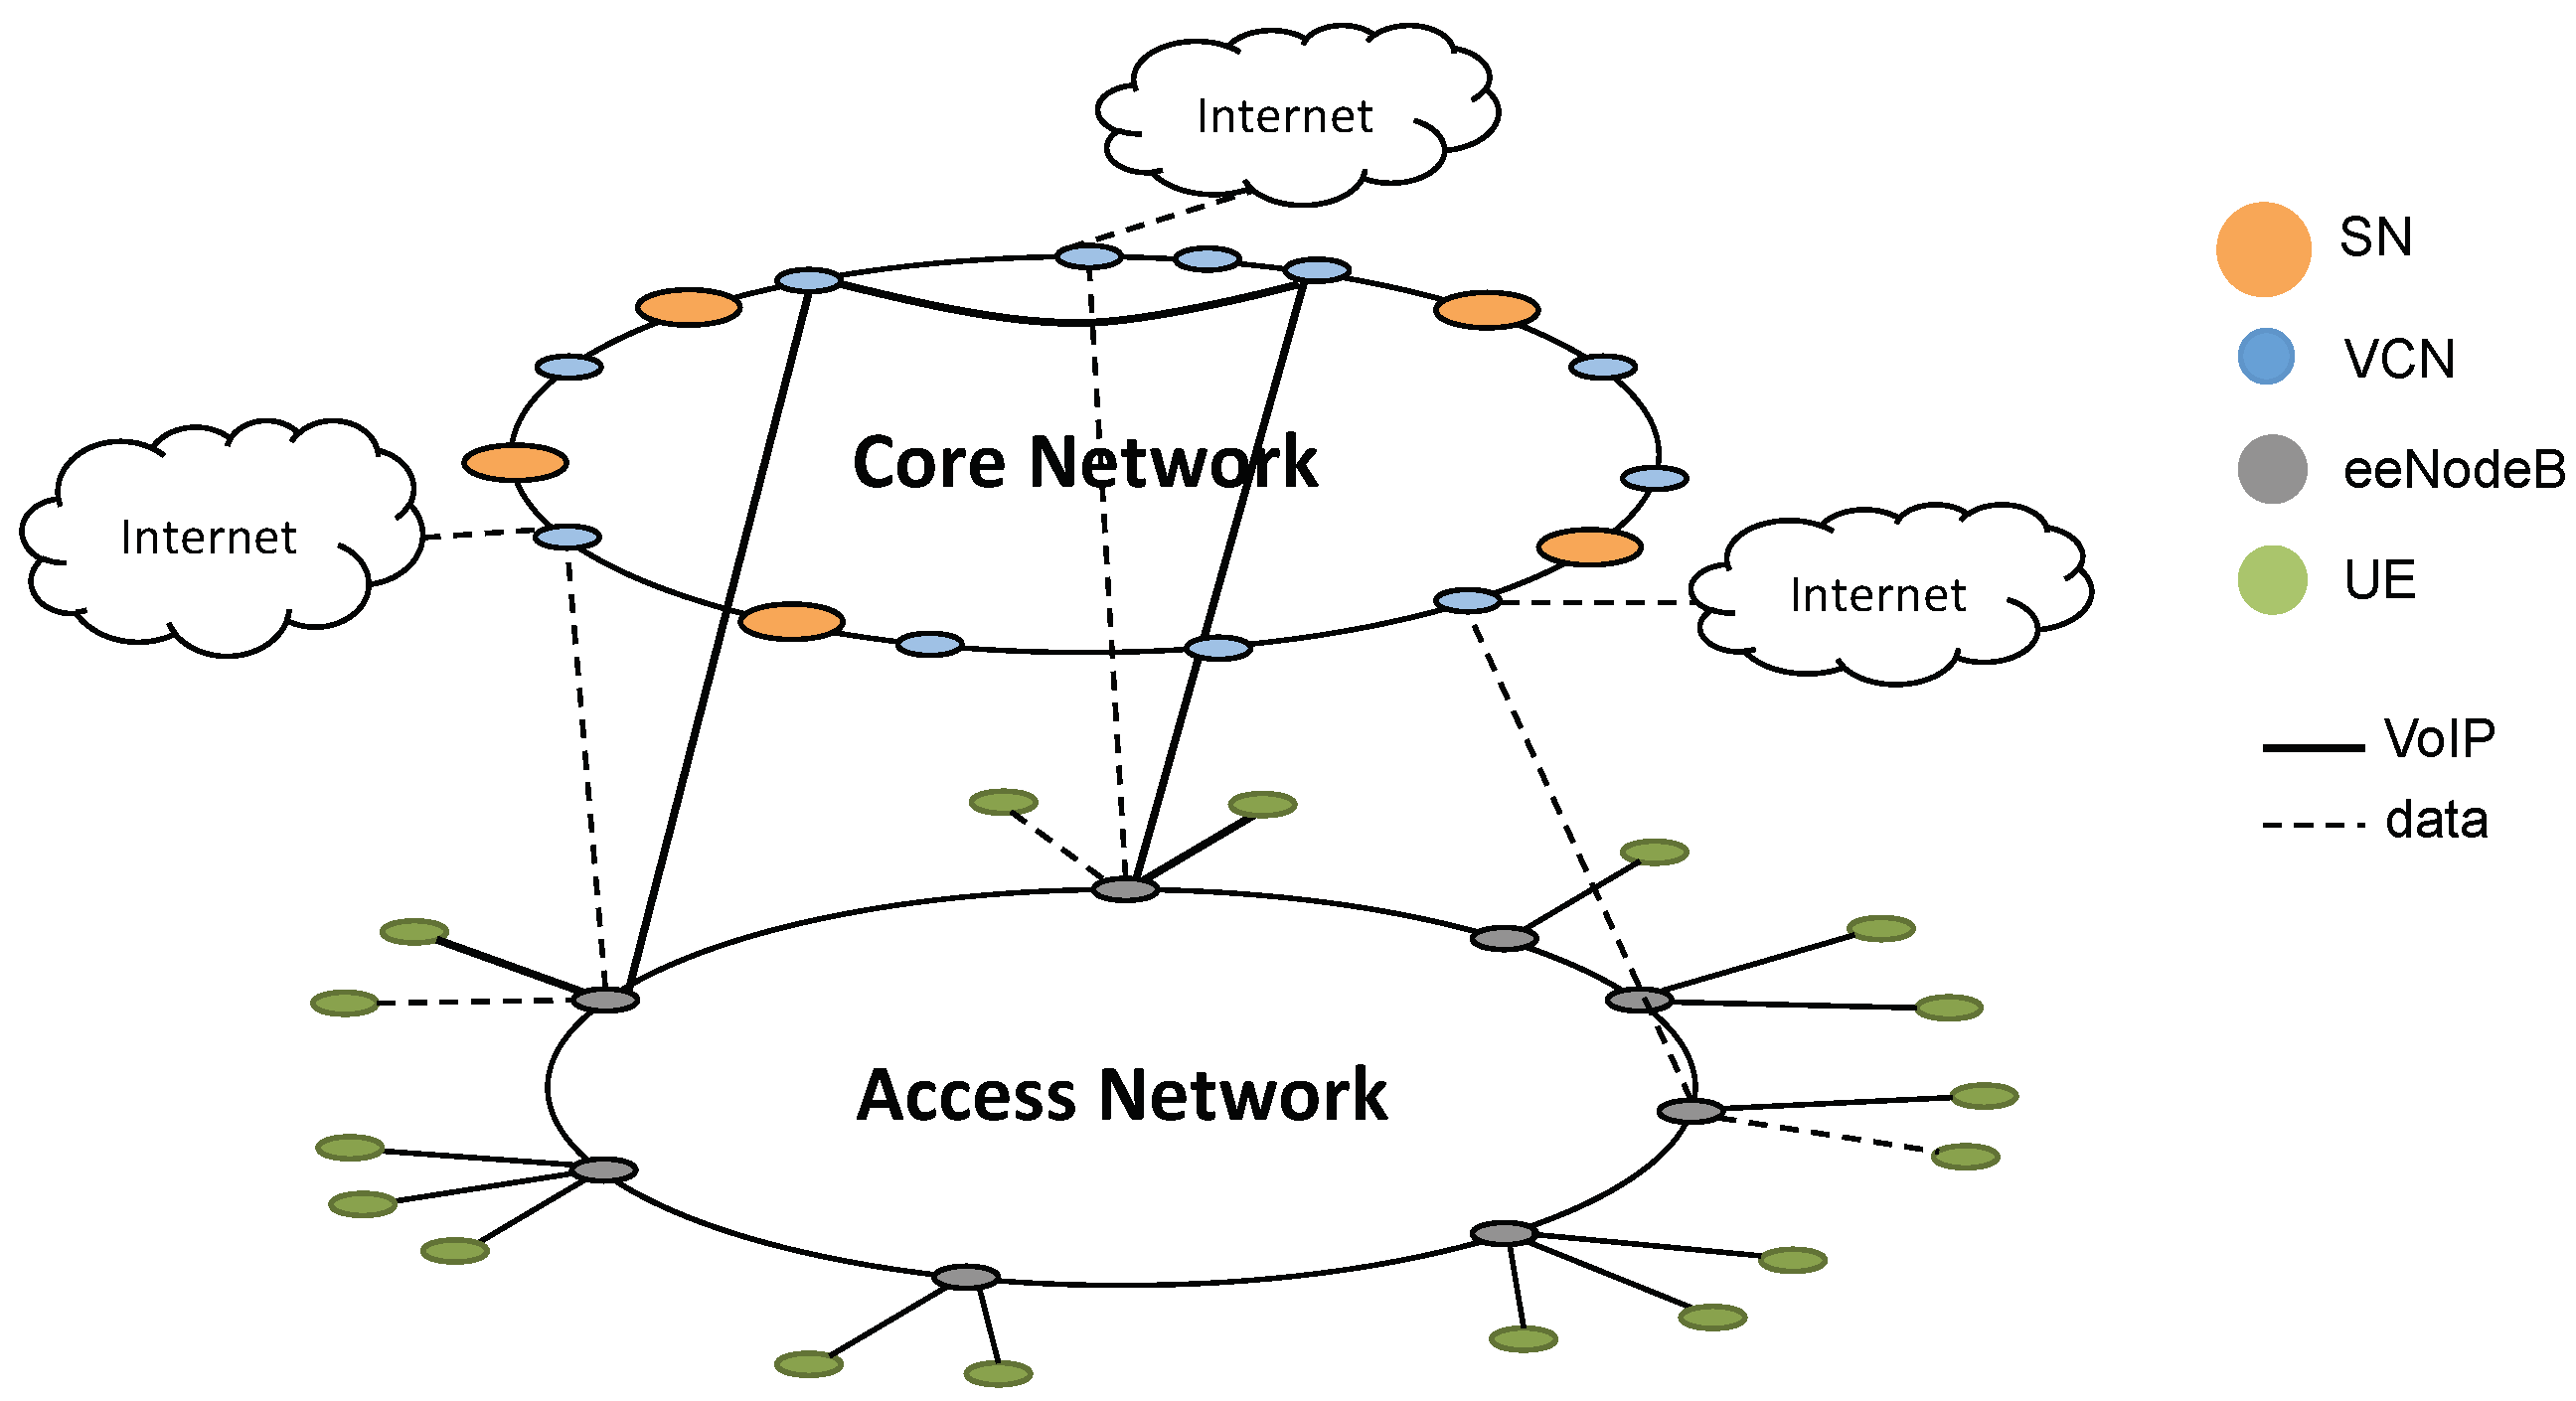 cellular network architecture